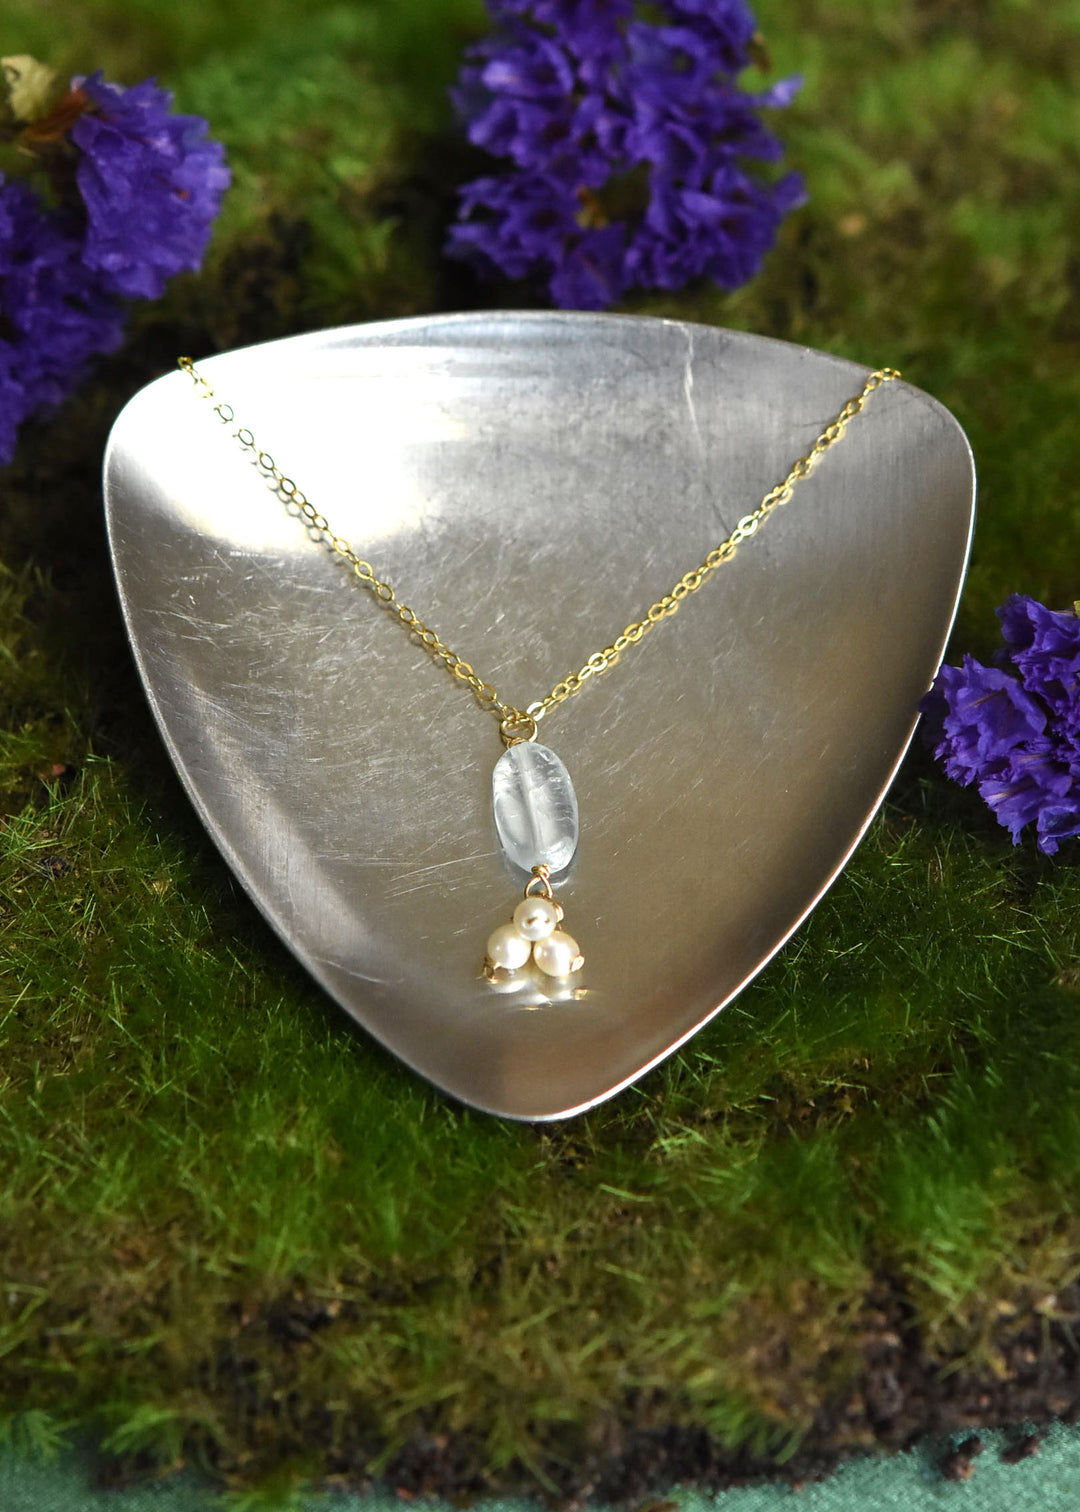 Tiny Bliss Aquamarine Necklace - Goldmakers Fine Jewelry